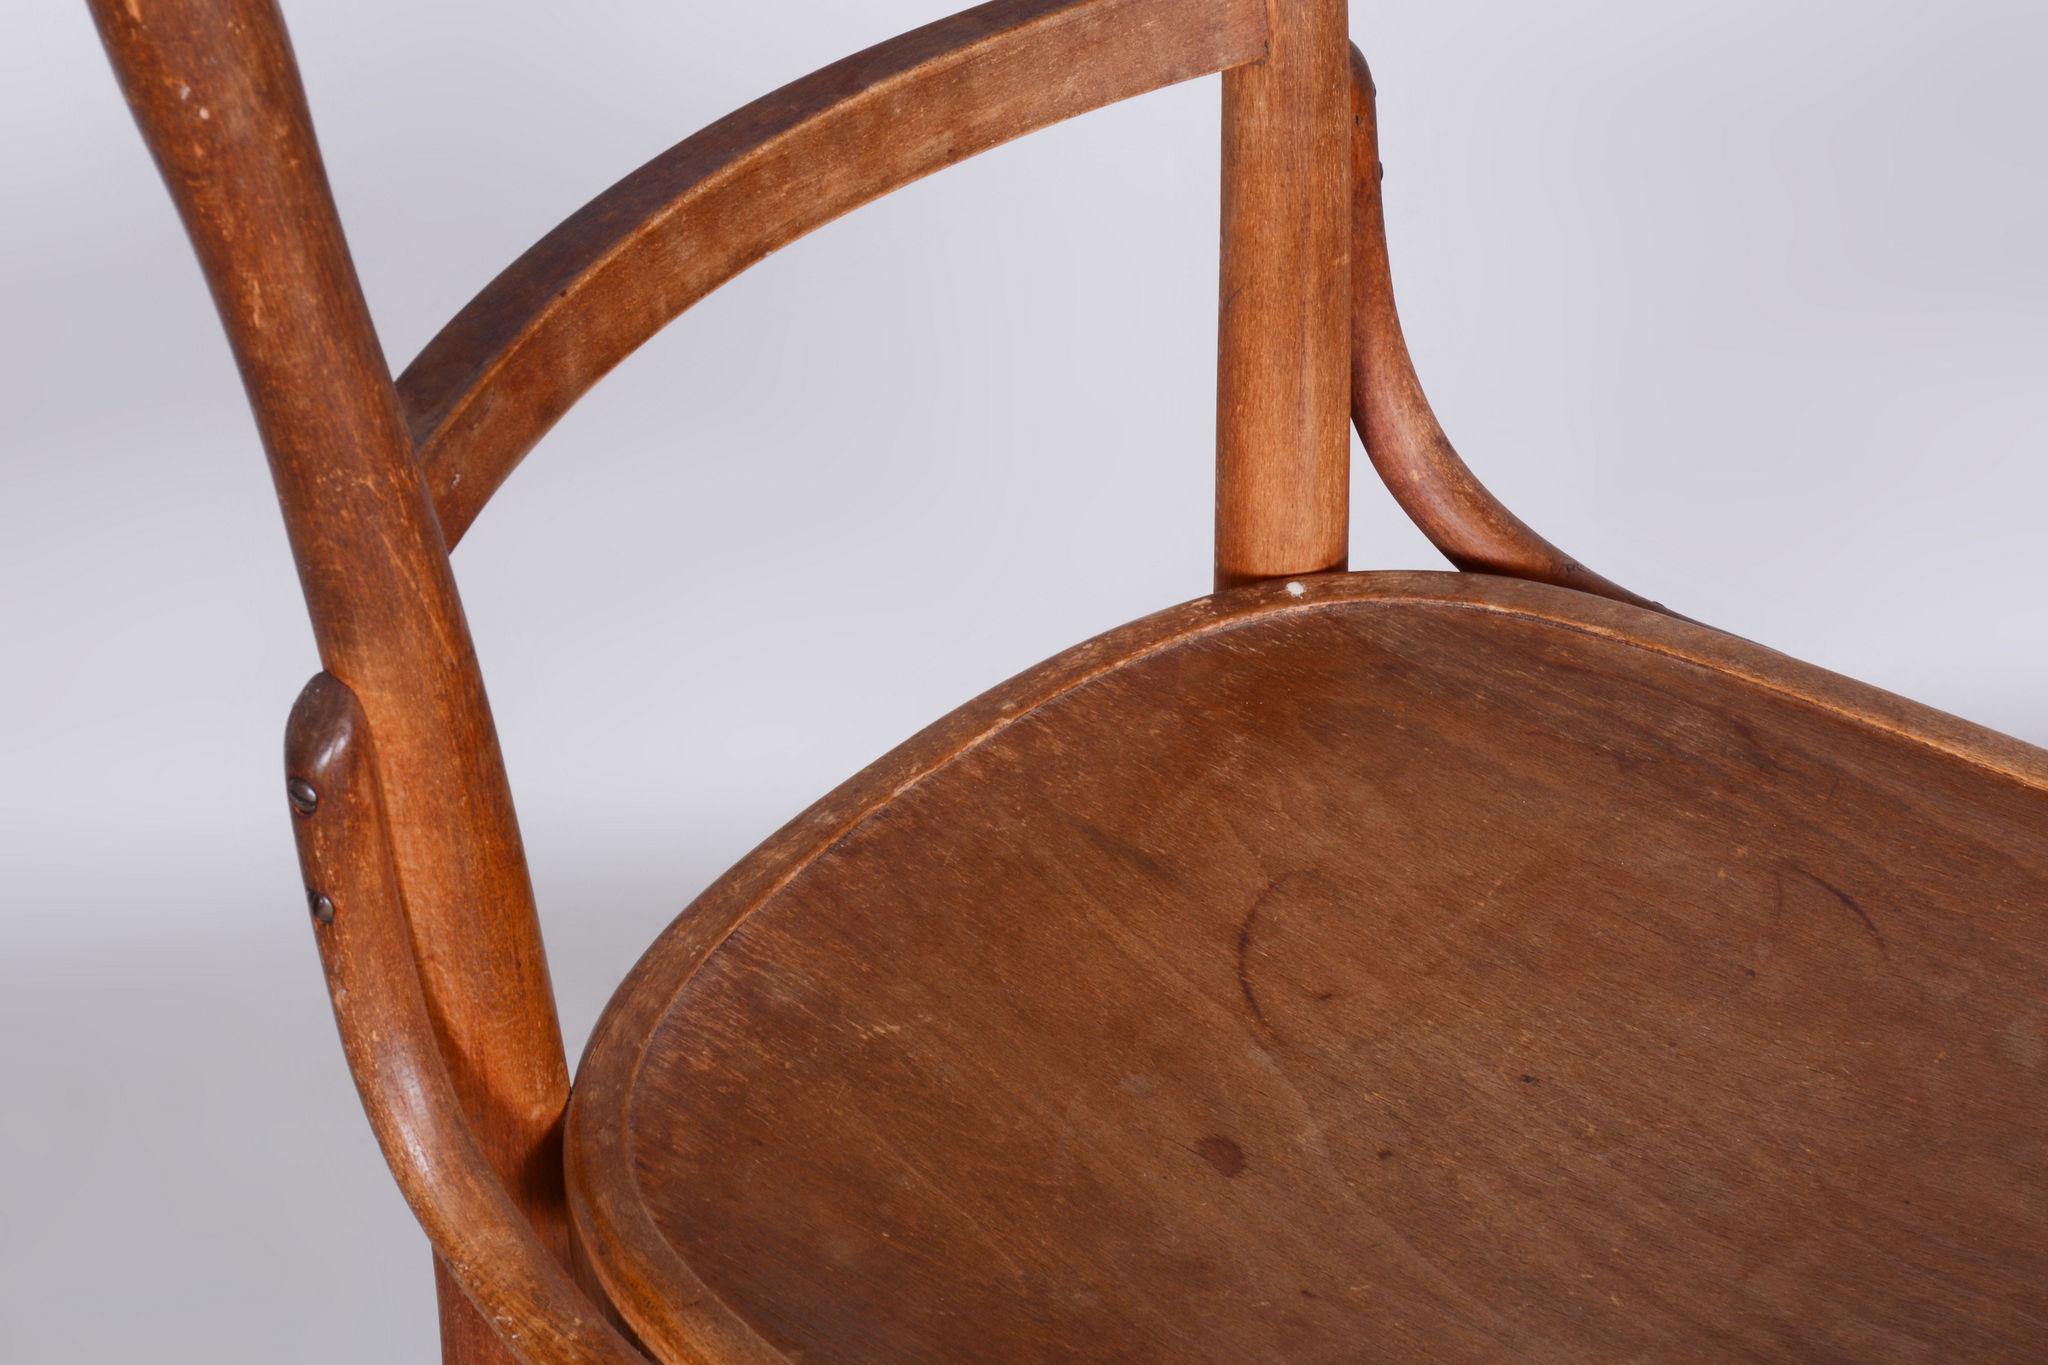 Original Art Deco Beech Chair, Fischel, Stable Construction, Czechia, 1920s For Sale 1